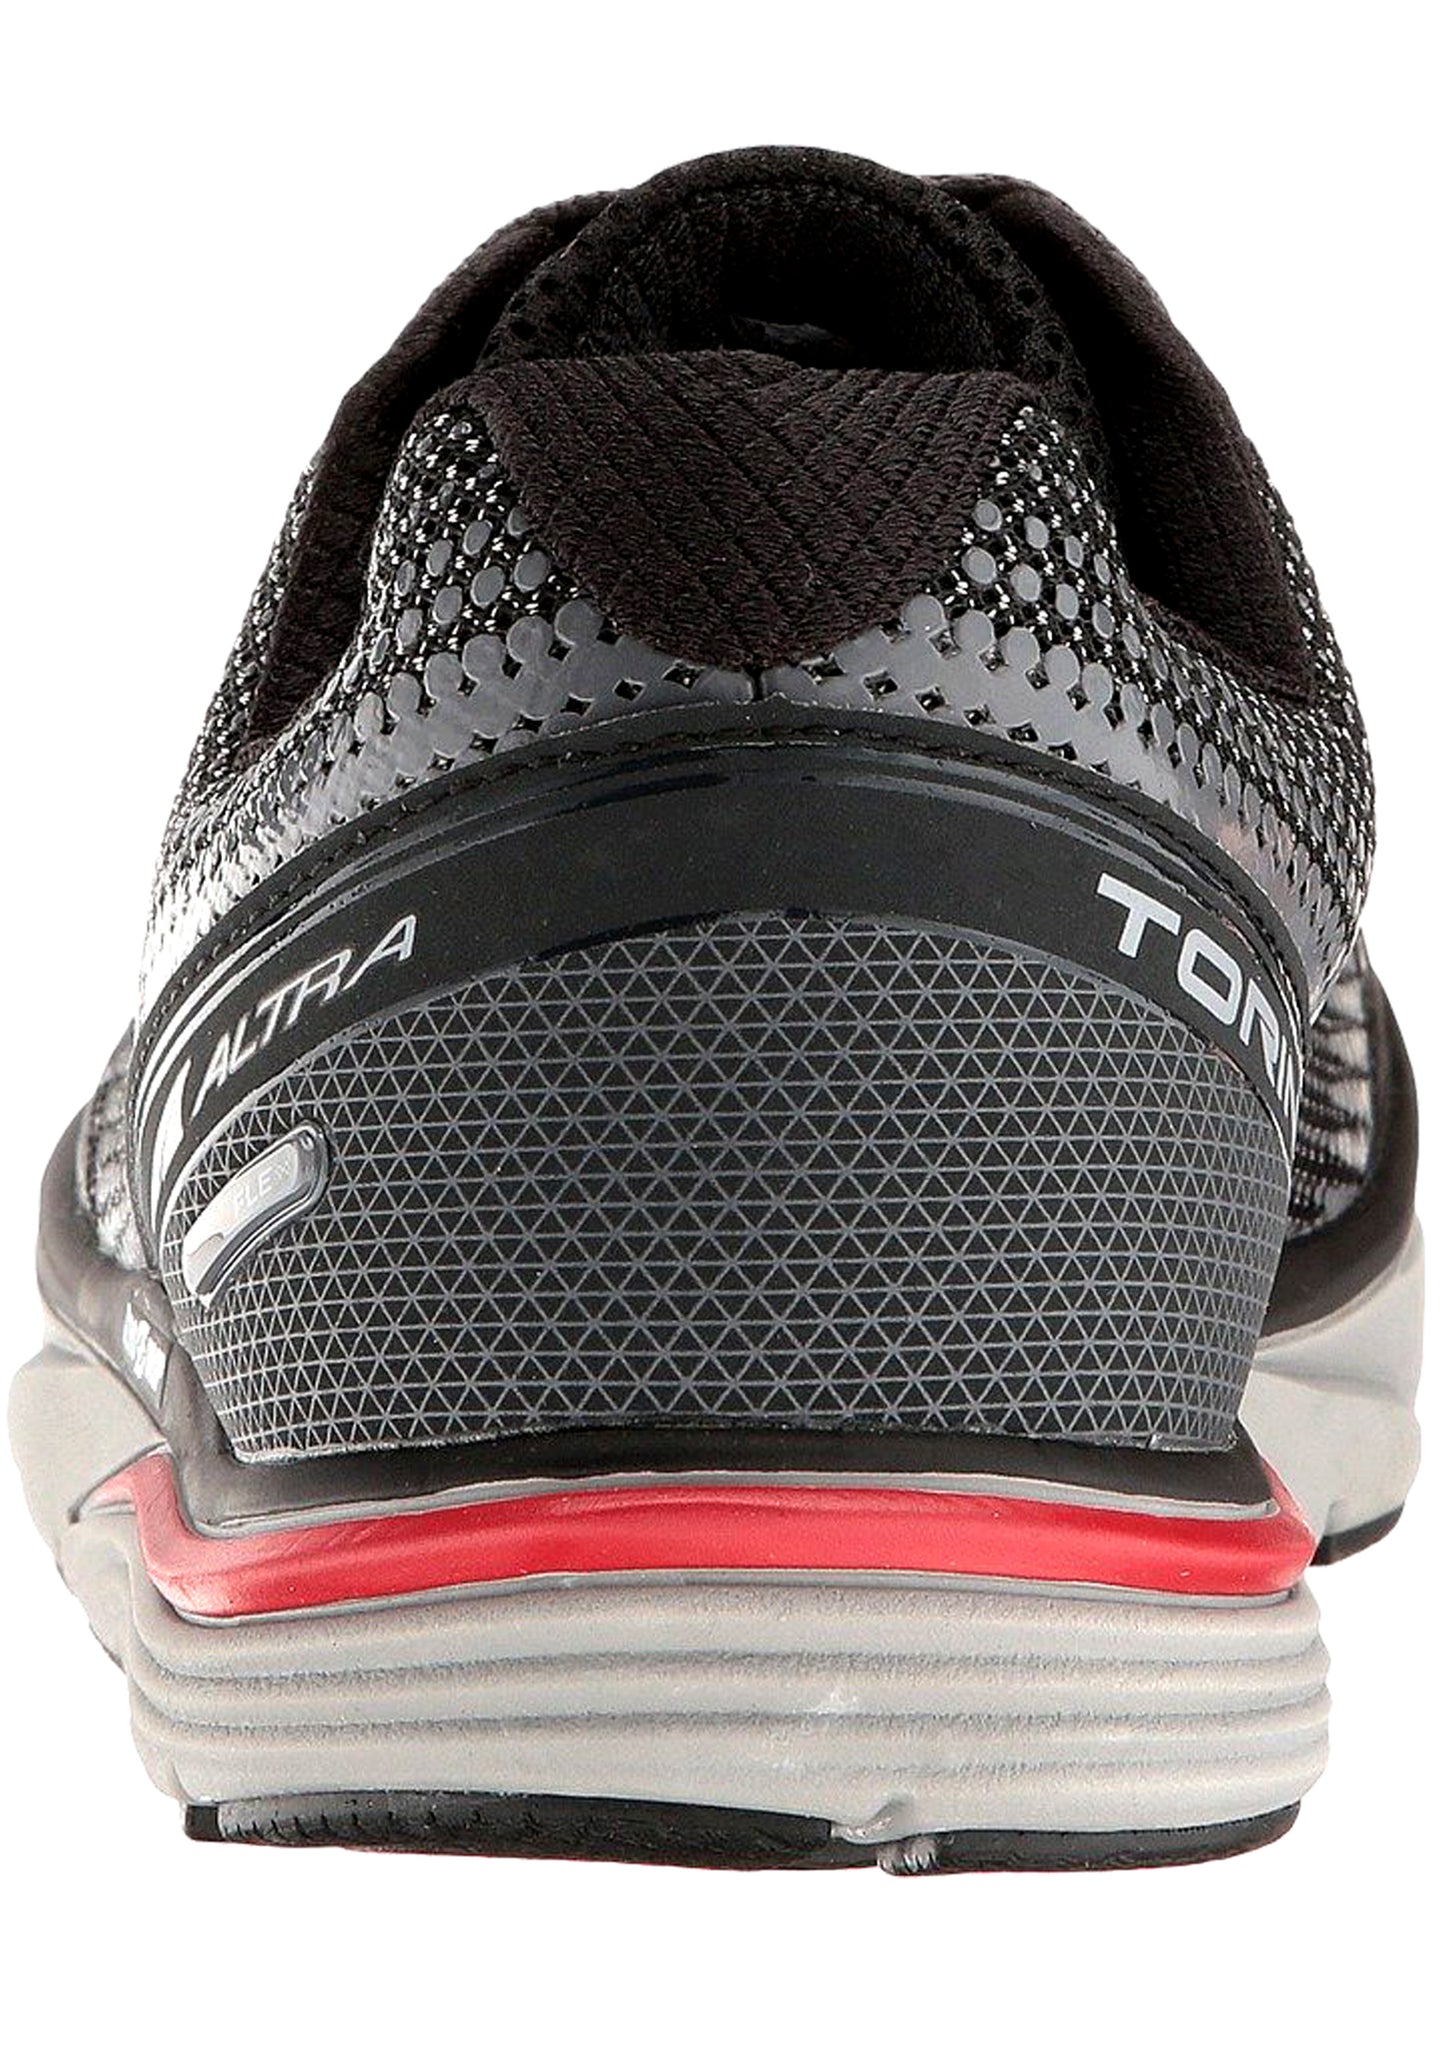 
                  
                    Back of Black/Red Altra Men's Running Lightweight Platform Flexible Shoes Torin 3.0
                  
                